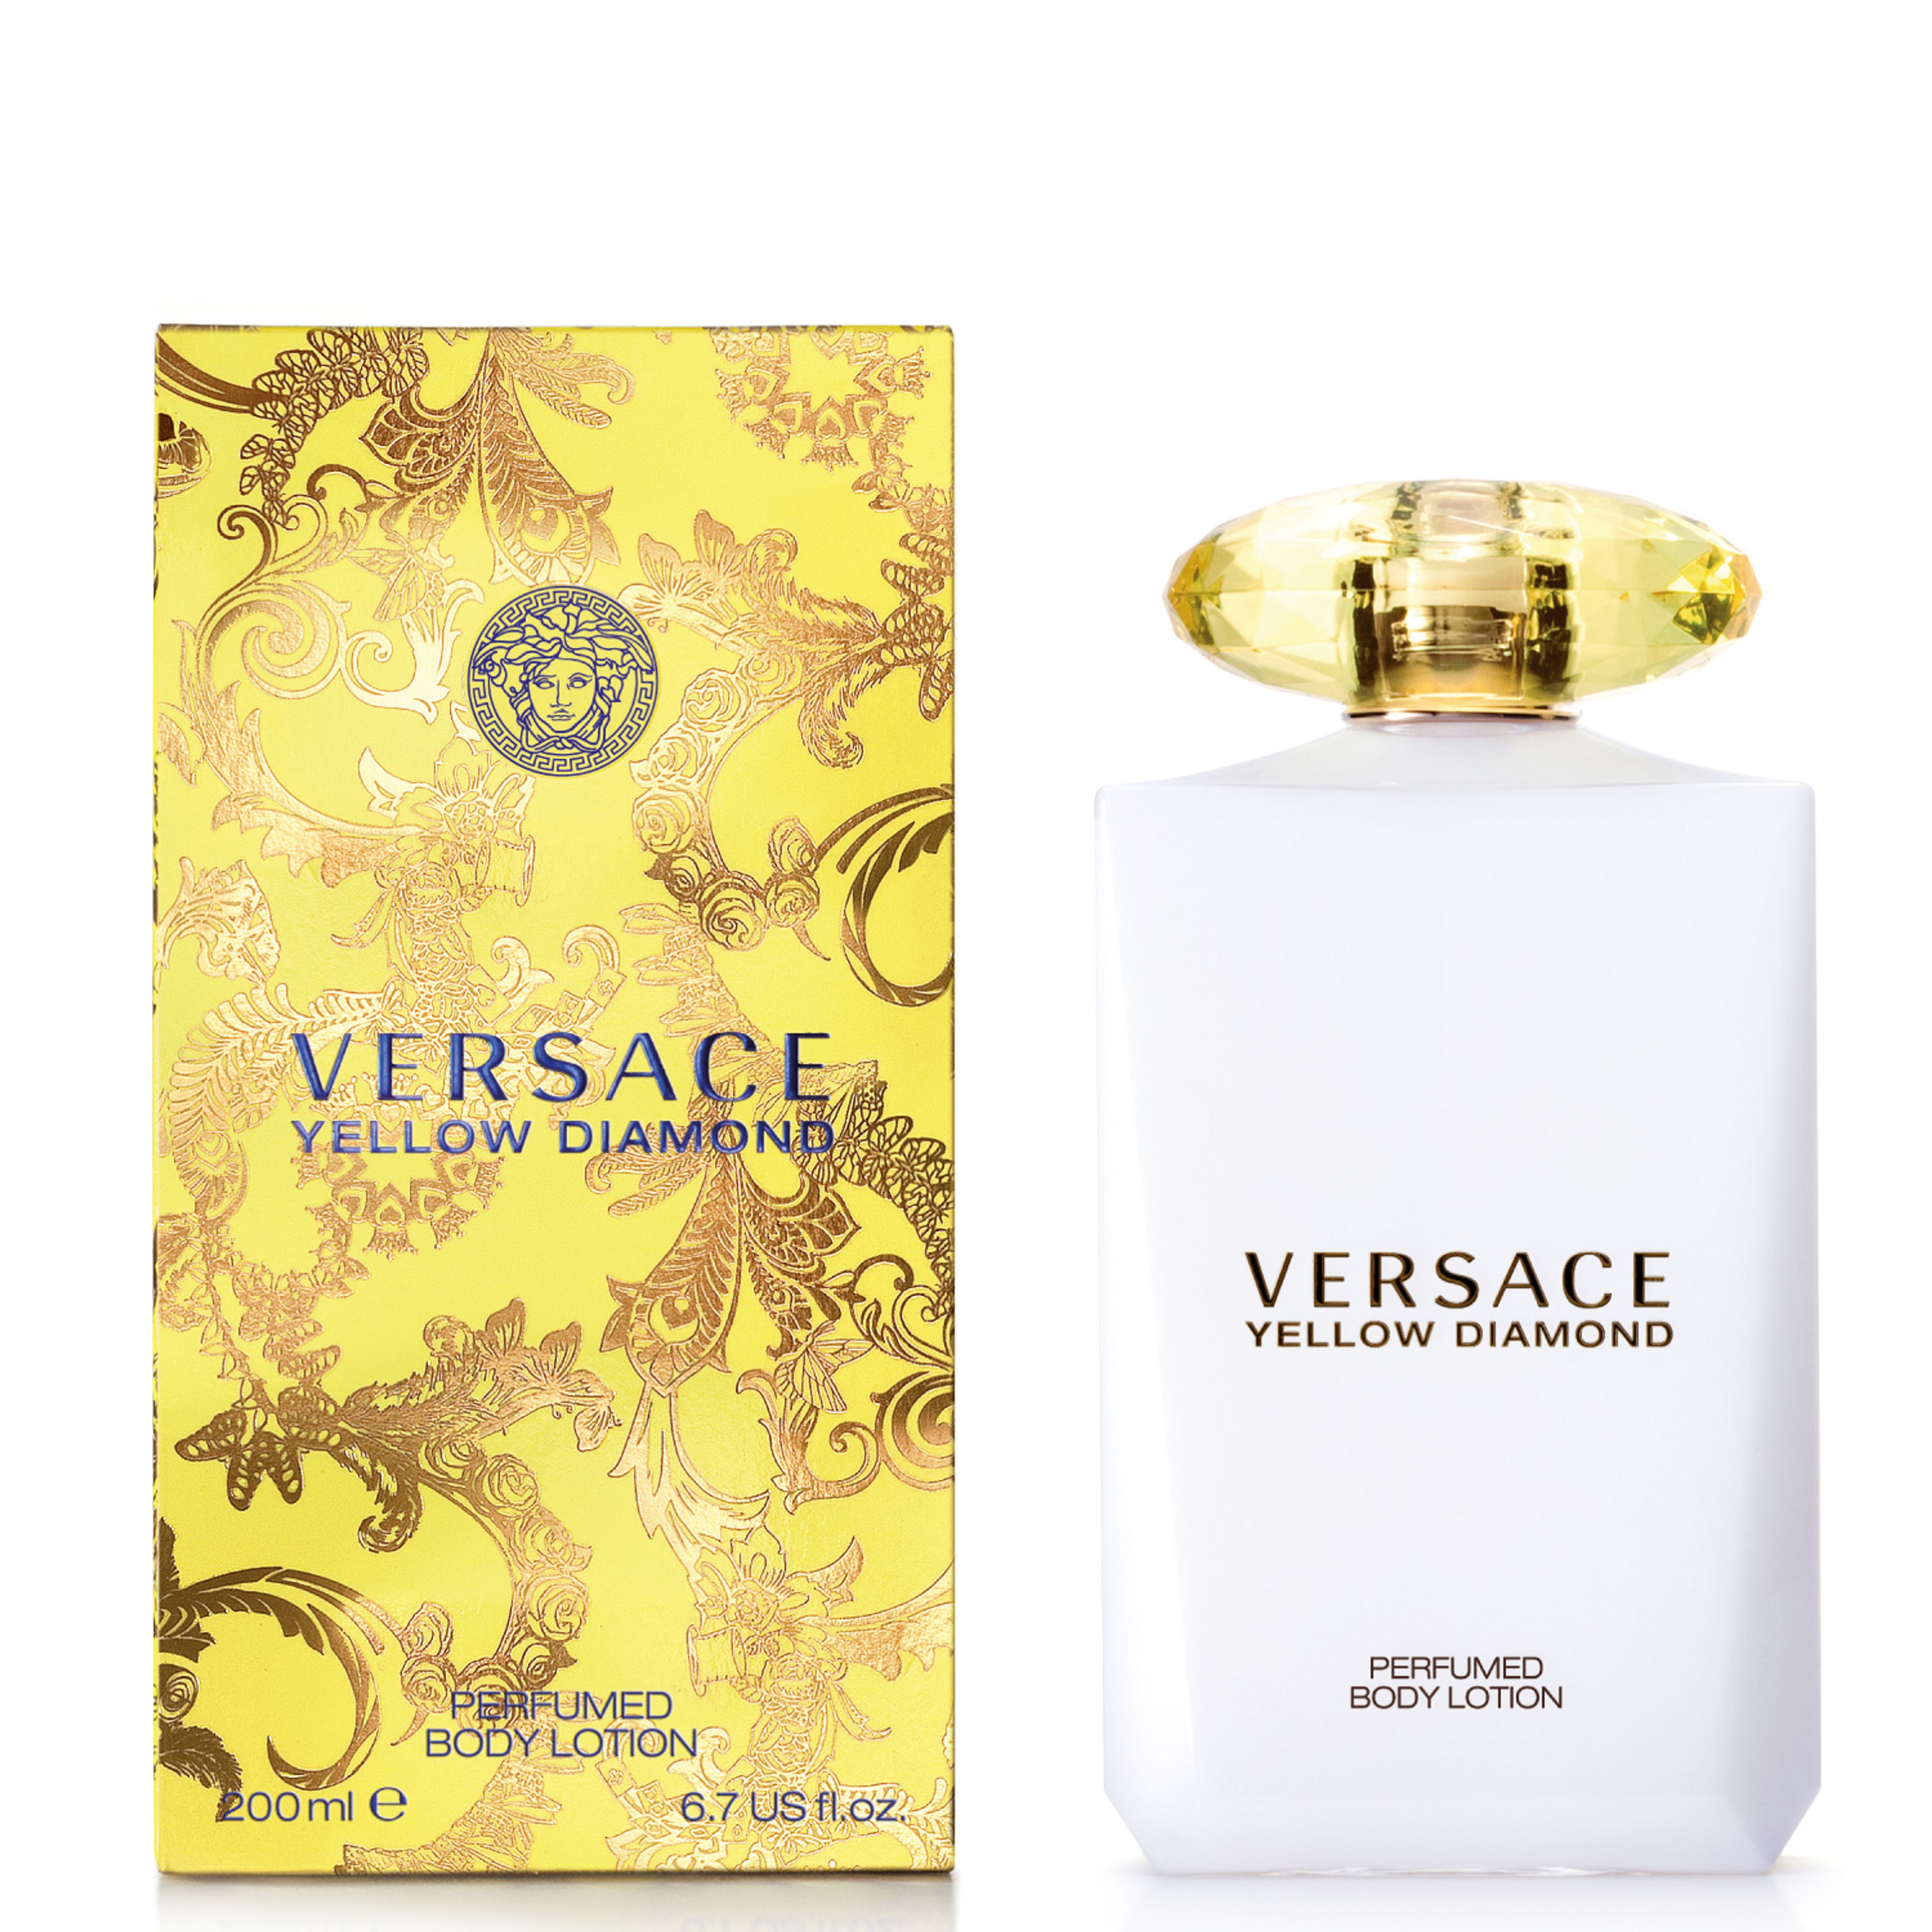 Versace Yellow Diamond Perfumed Body Lotion 2